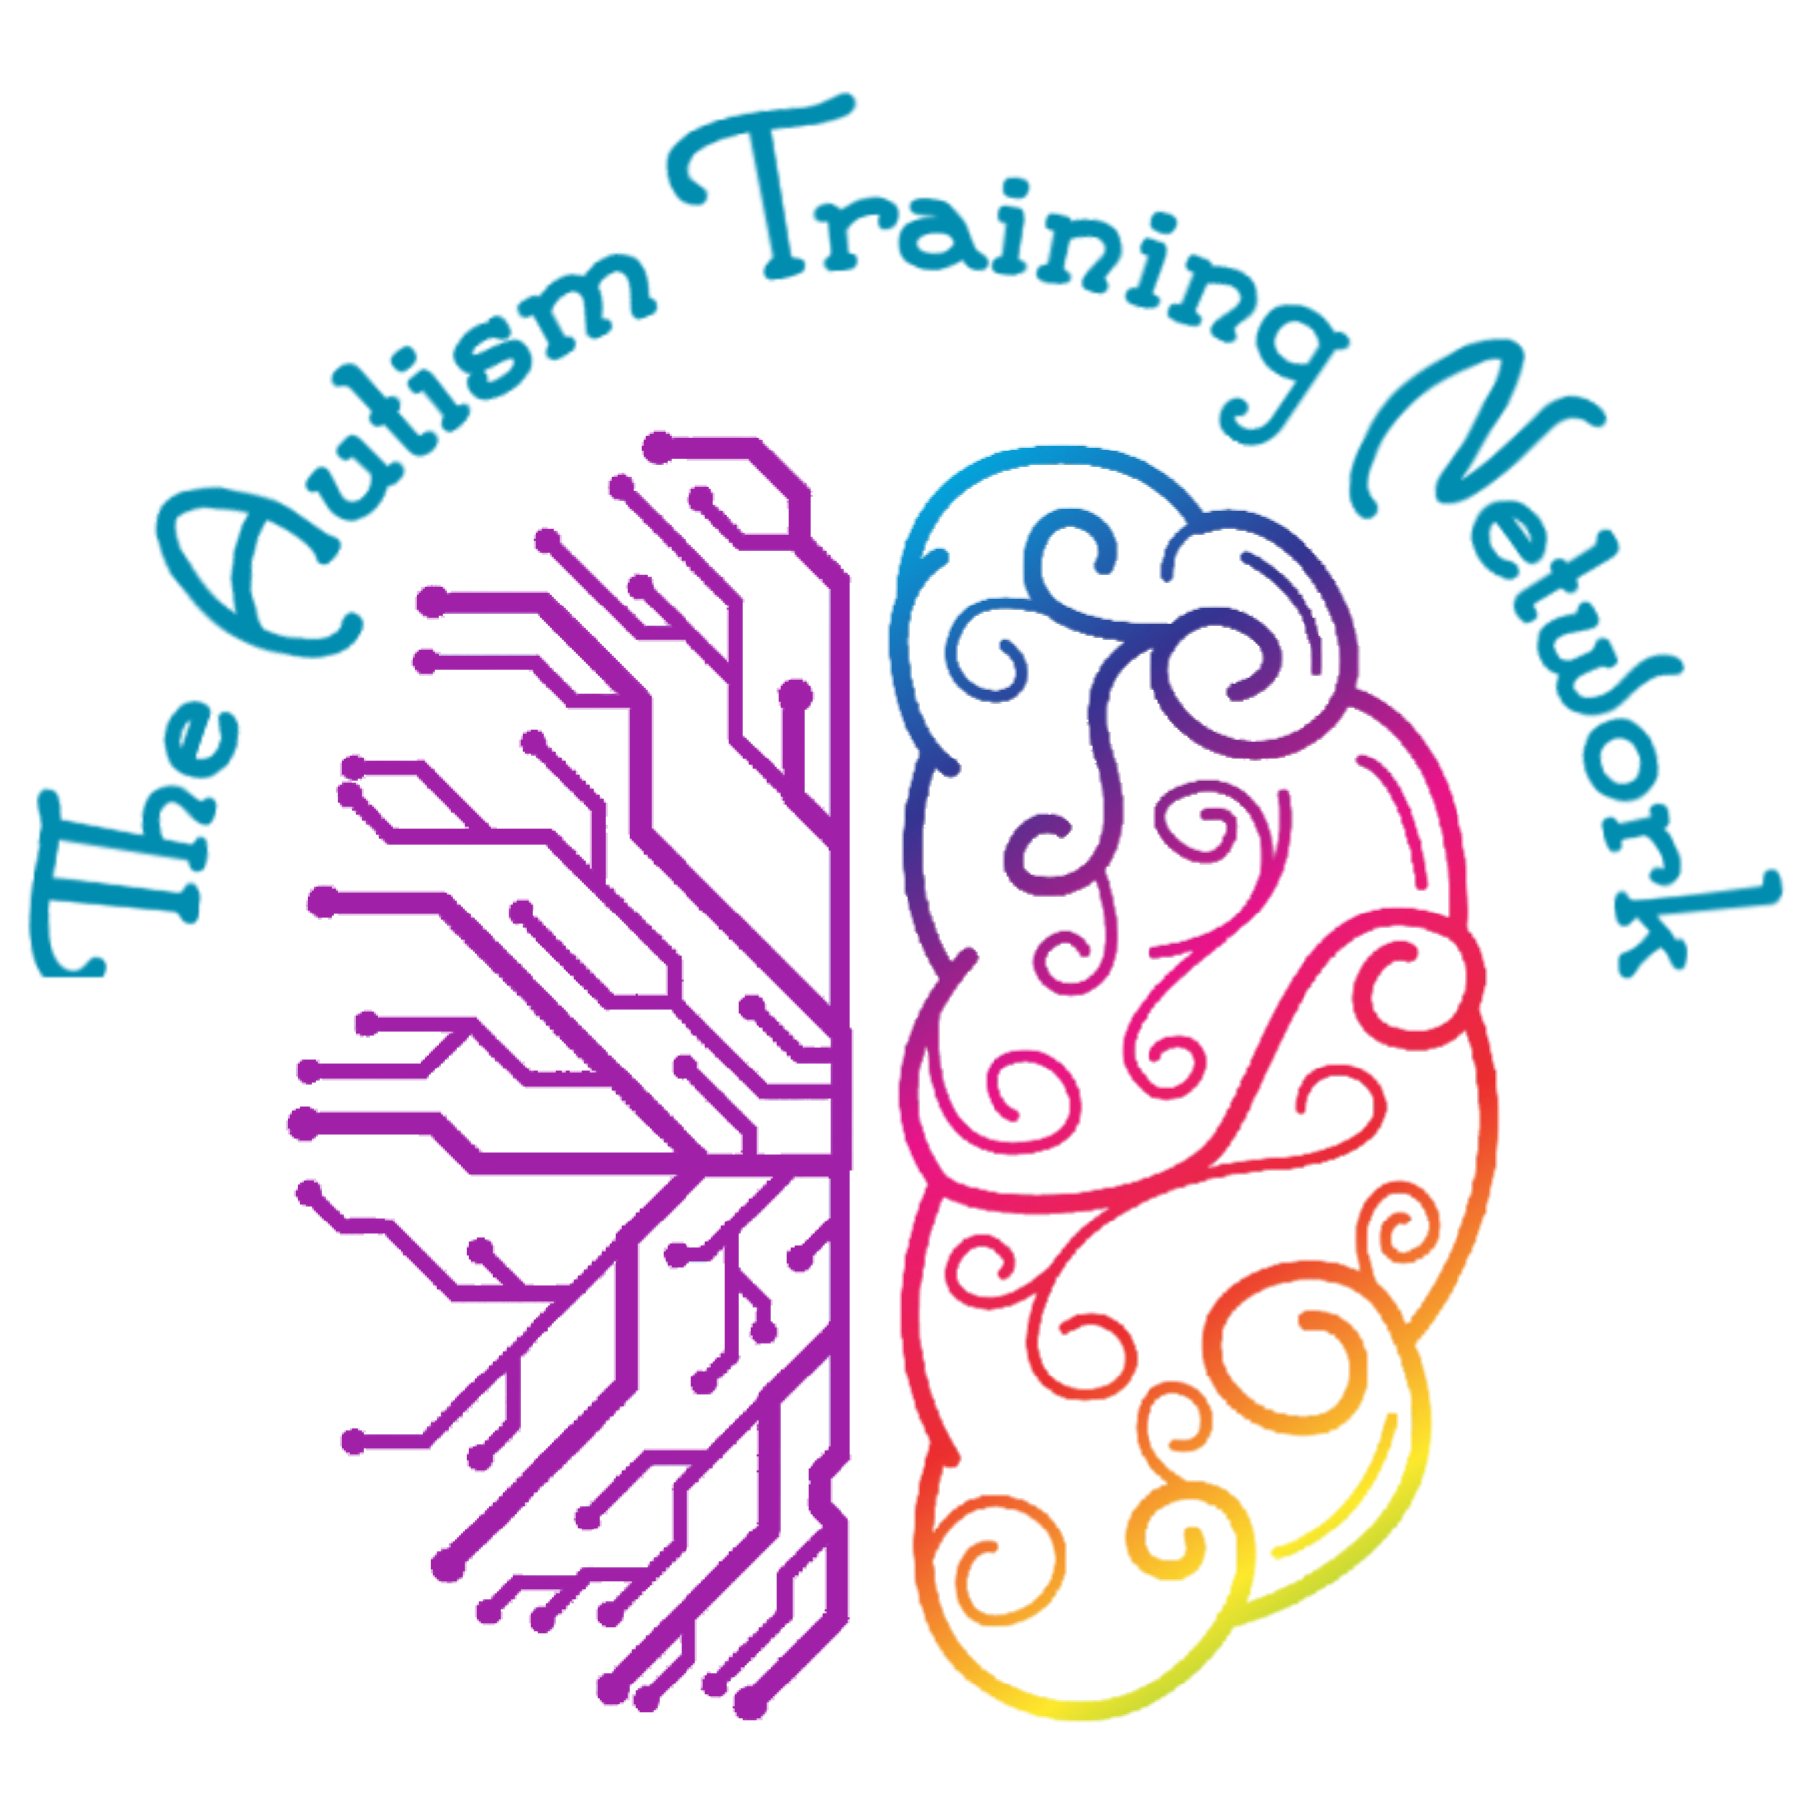 The Autism Training Network Ltd logo